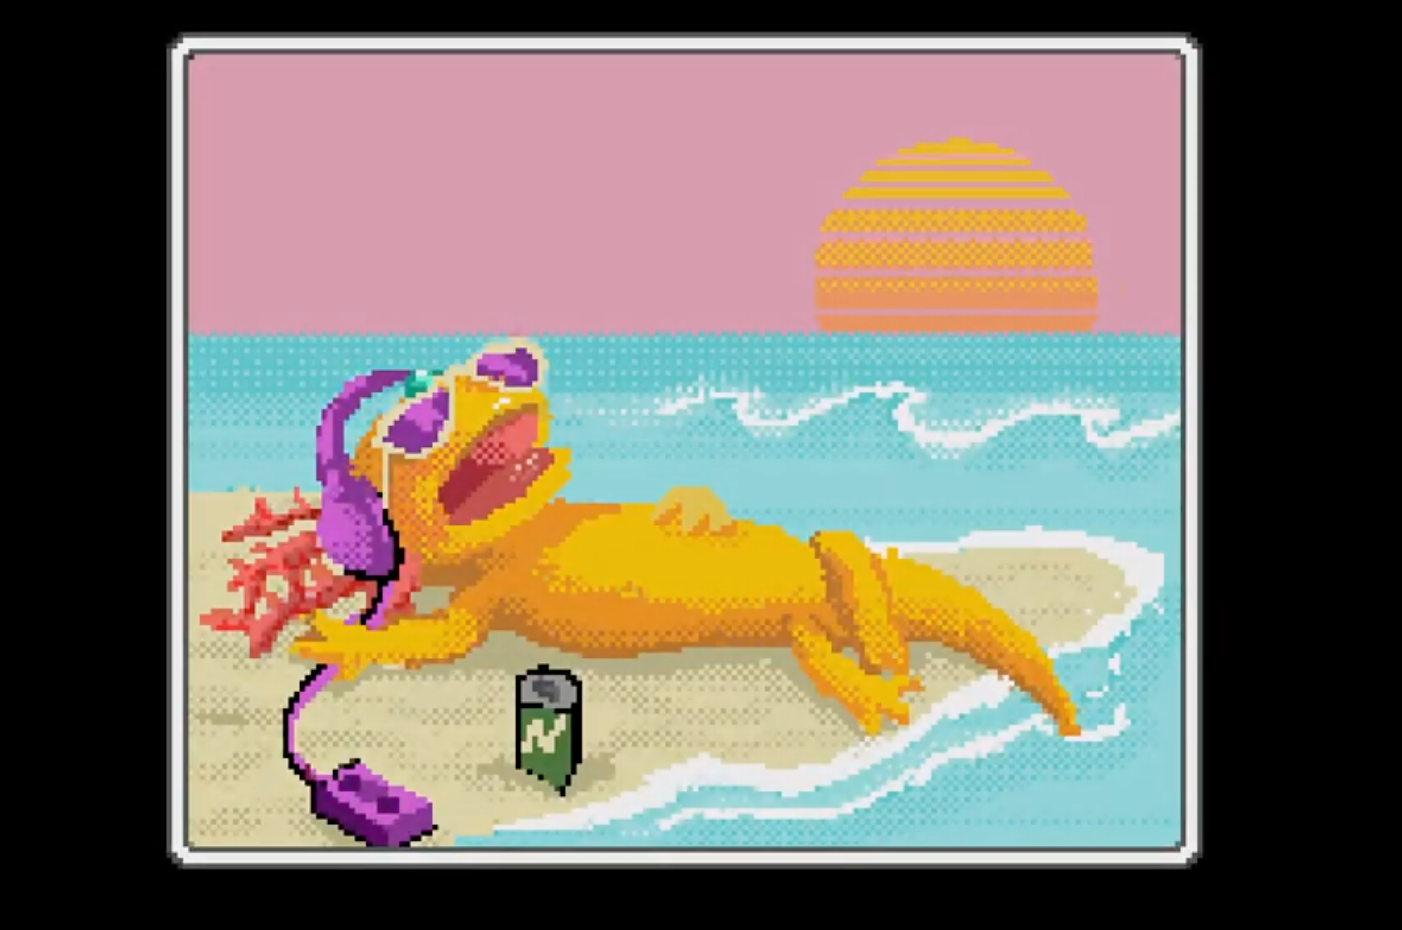 Screenshot from Chill-a-lotl depicing the main character sun bathing